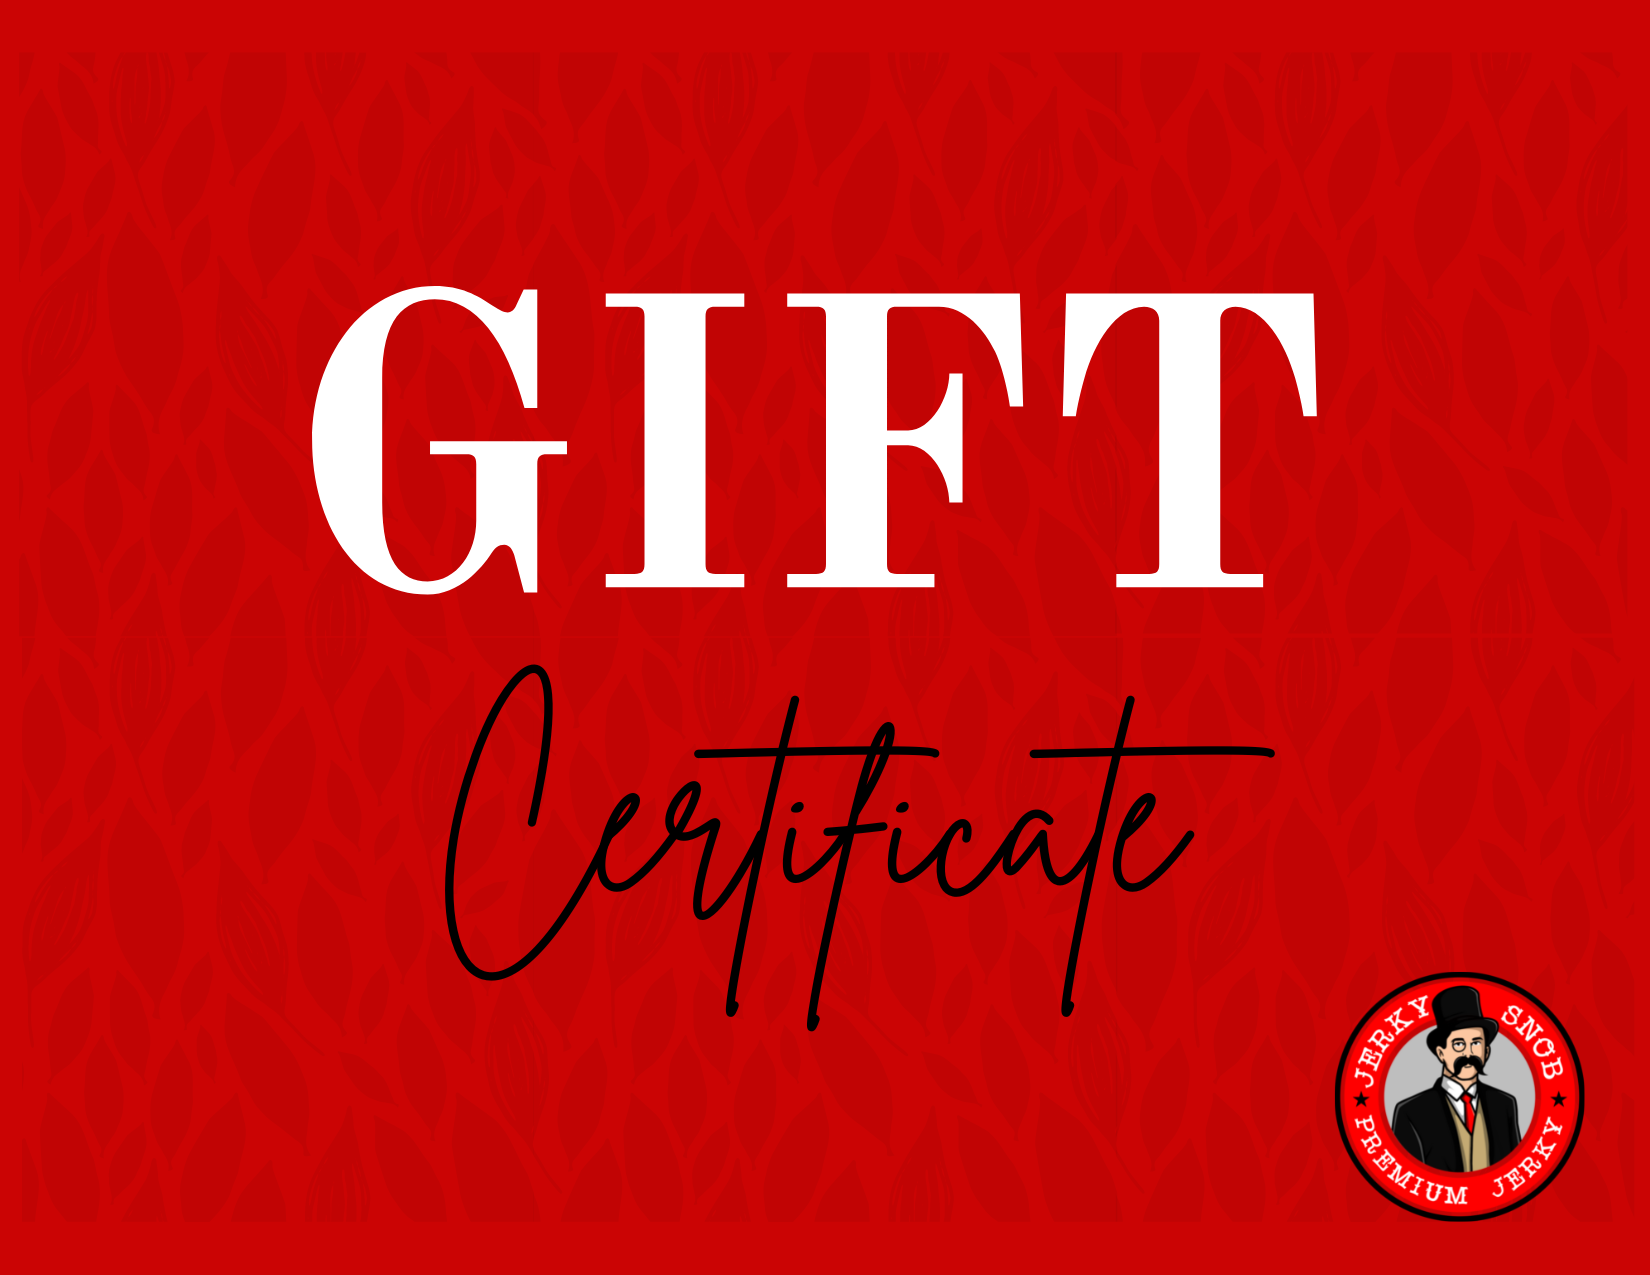 generic gift certificate template